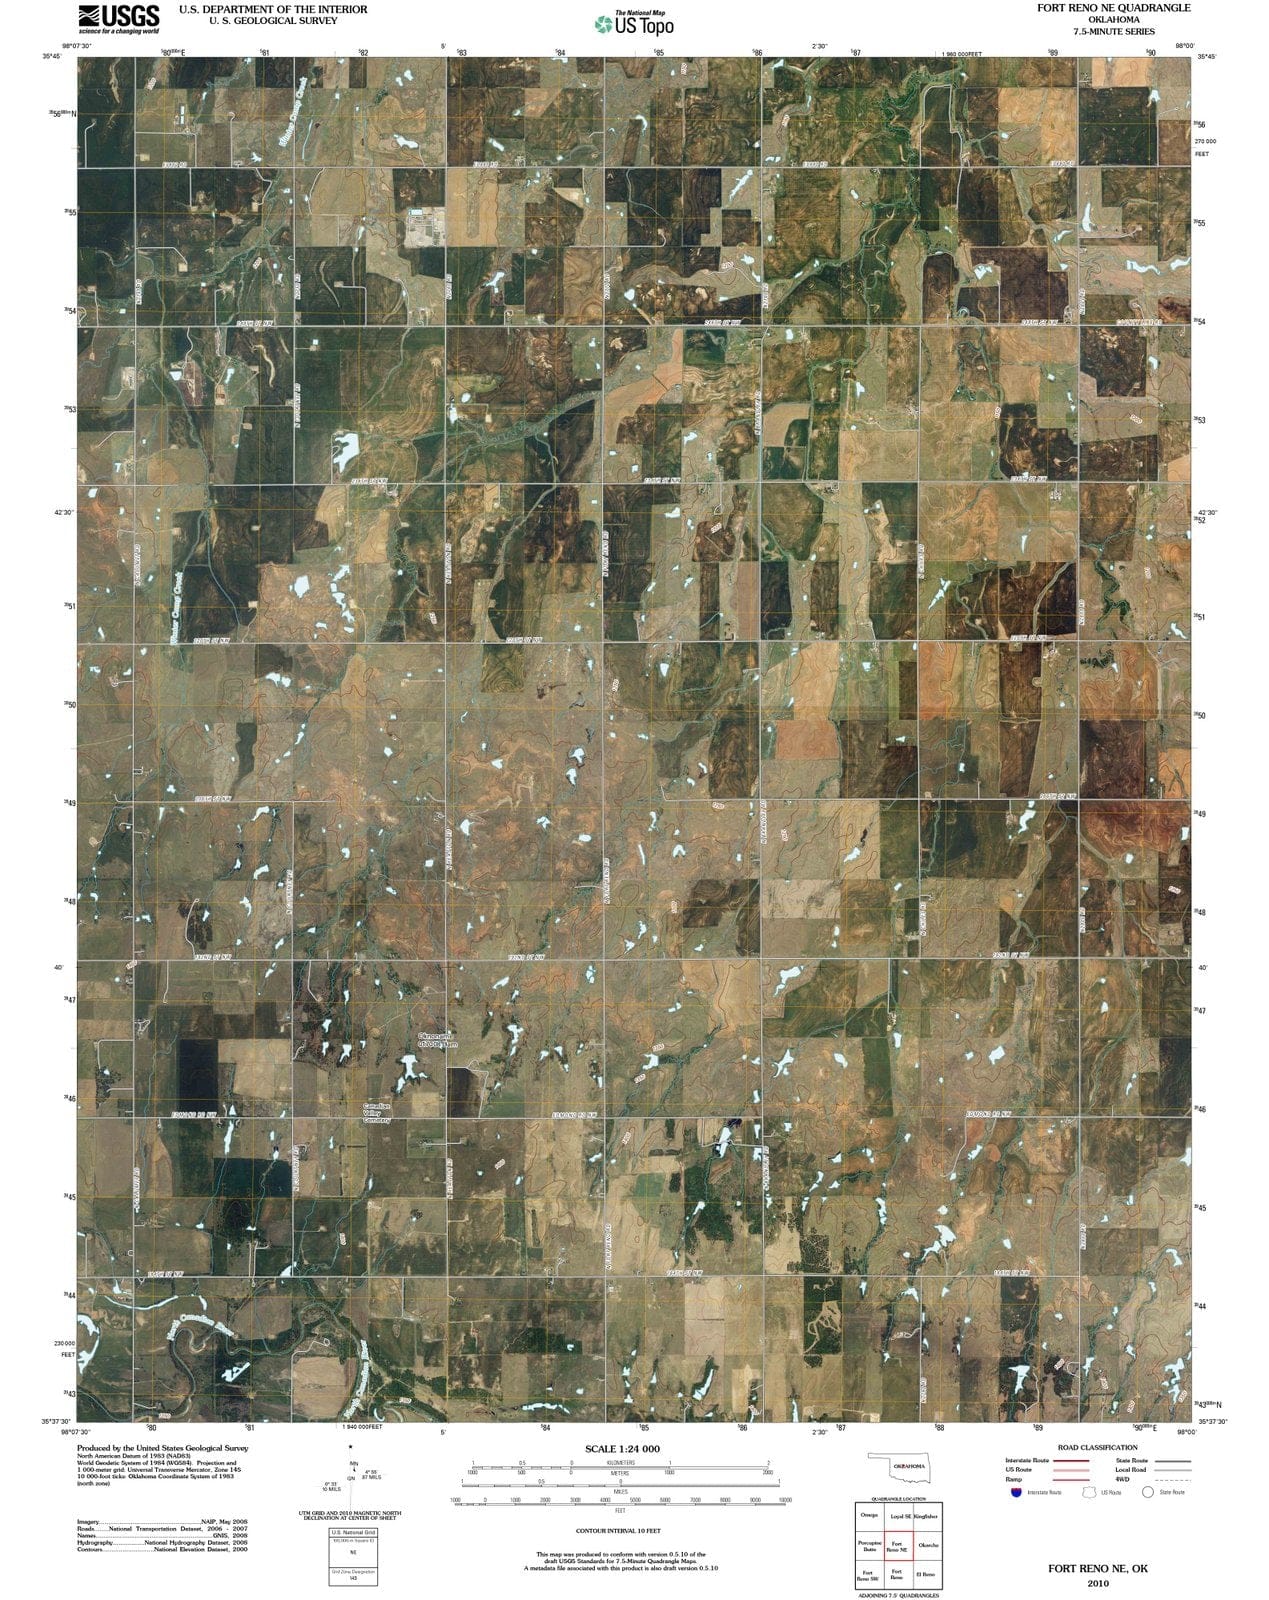 2010 Fort Reno, OK - Oklahoma - USGS Topographic Map